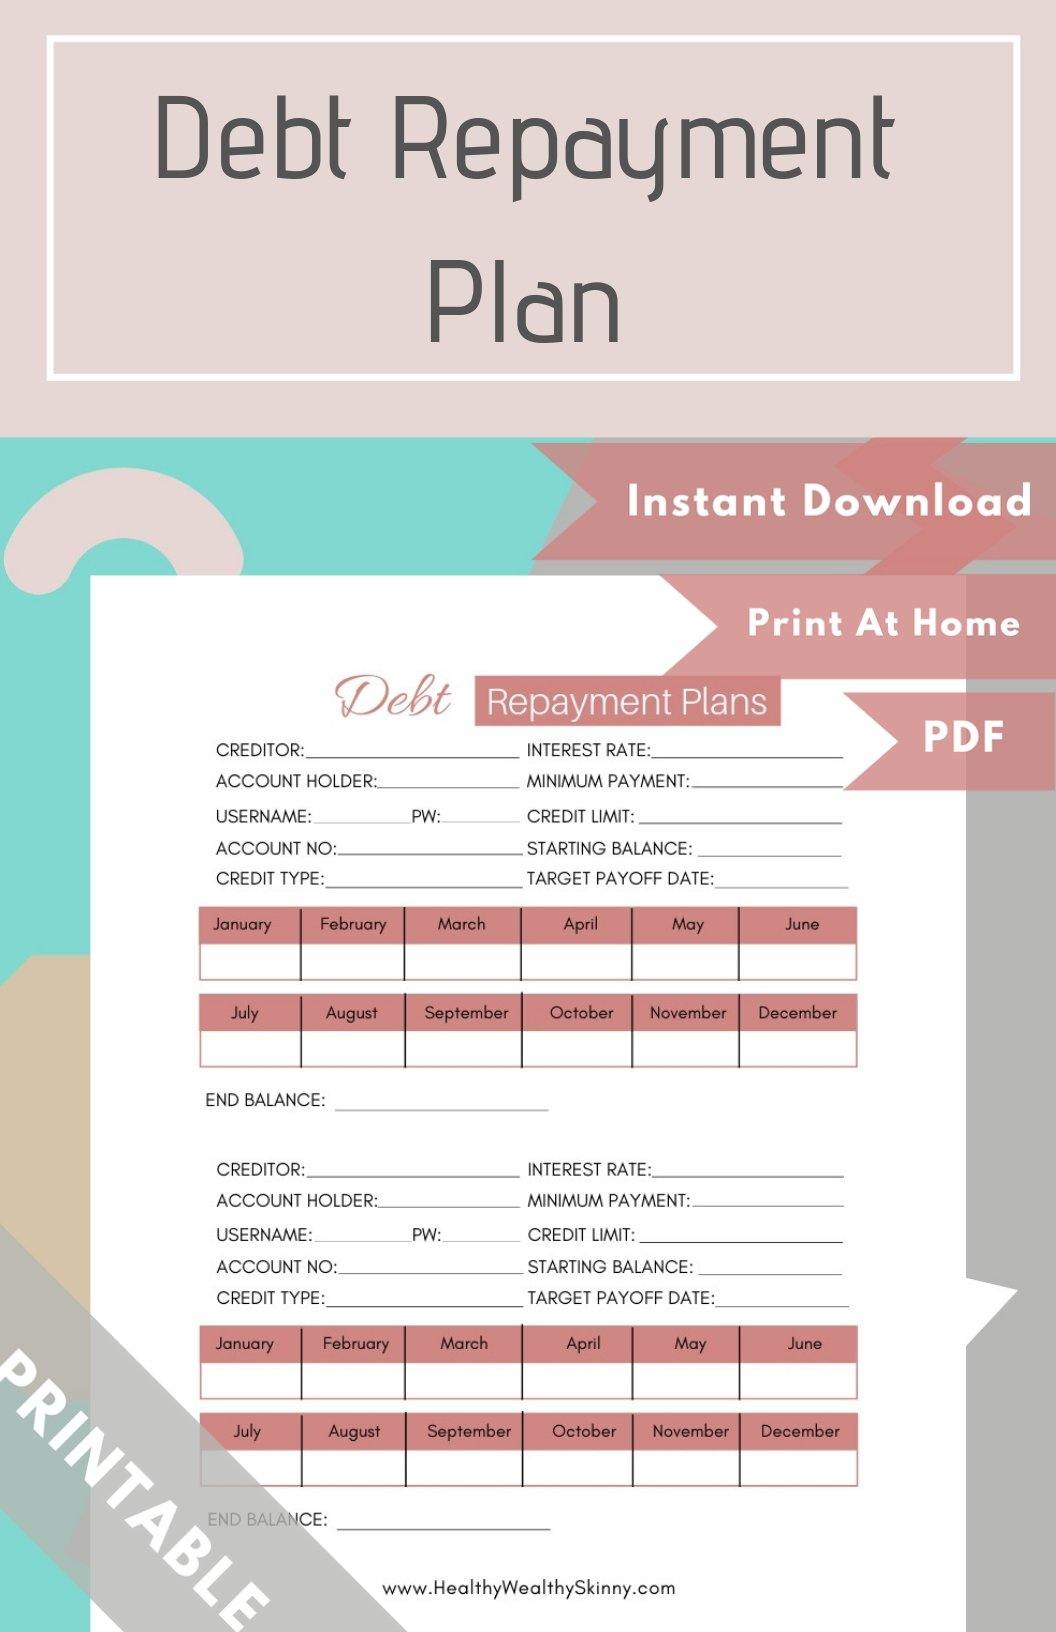 Debt Repayment Plan Worksheet PDF (Available in Various Colors) - Healthy Wealthy Skinny